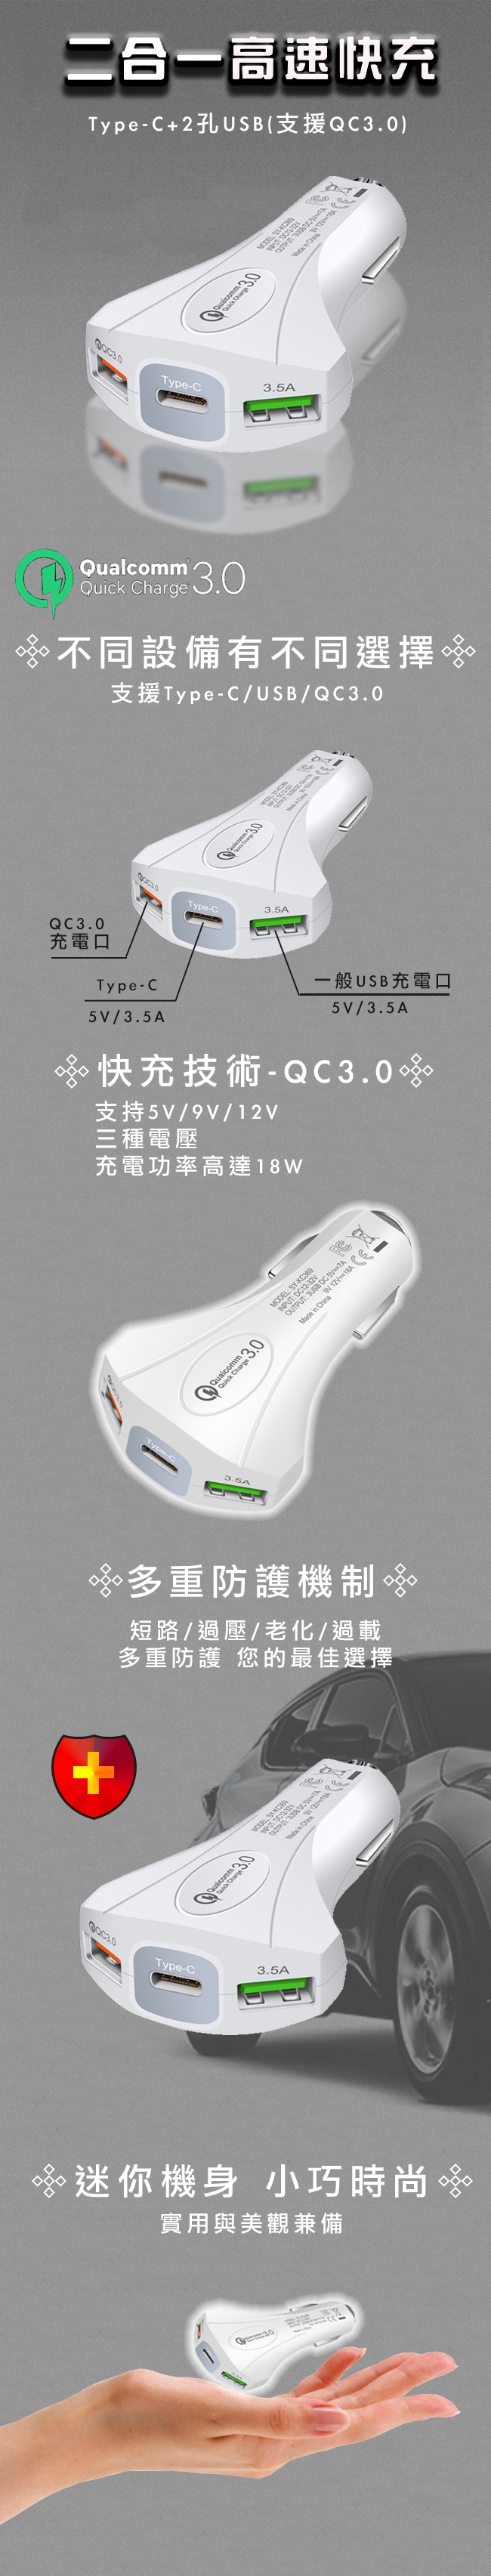 Sense神速 二合一Type-C+2孔USB(支援QC3.0)快充車充 白